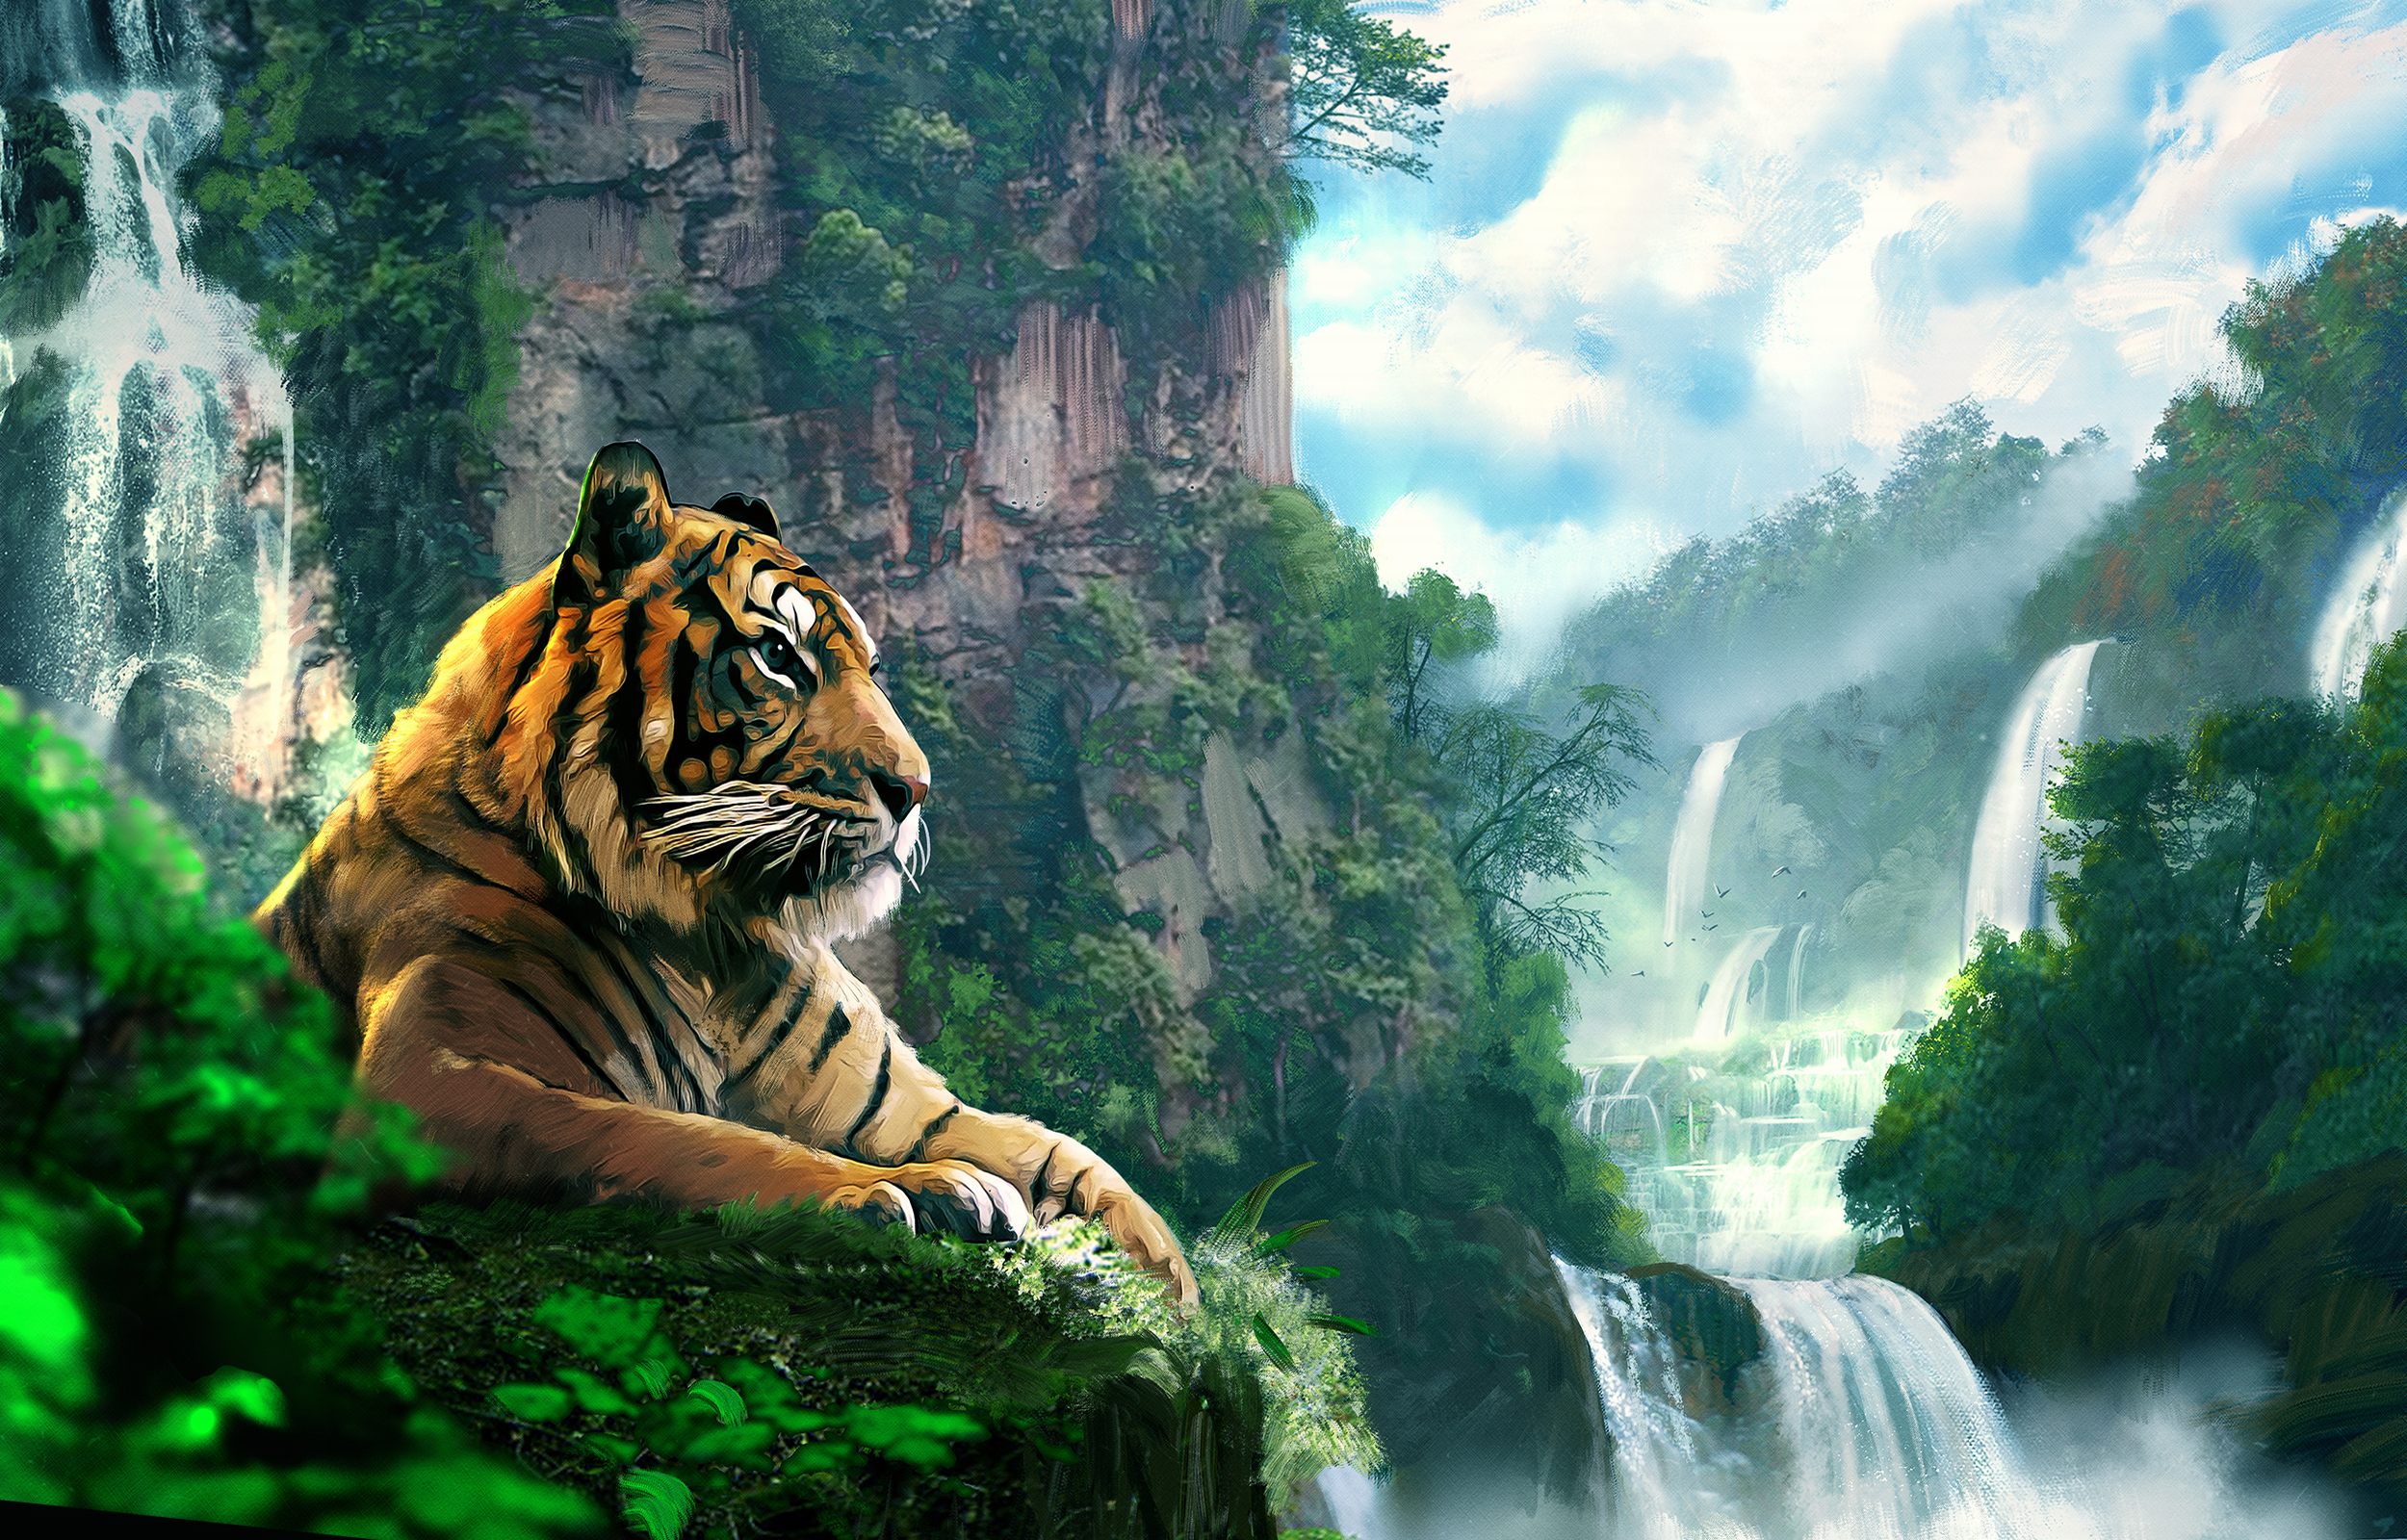 Tiger Art Painting Wallpaper HD For Desktop